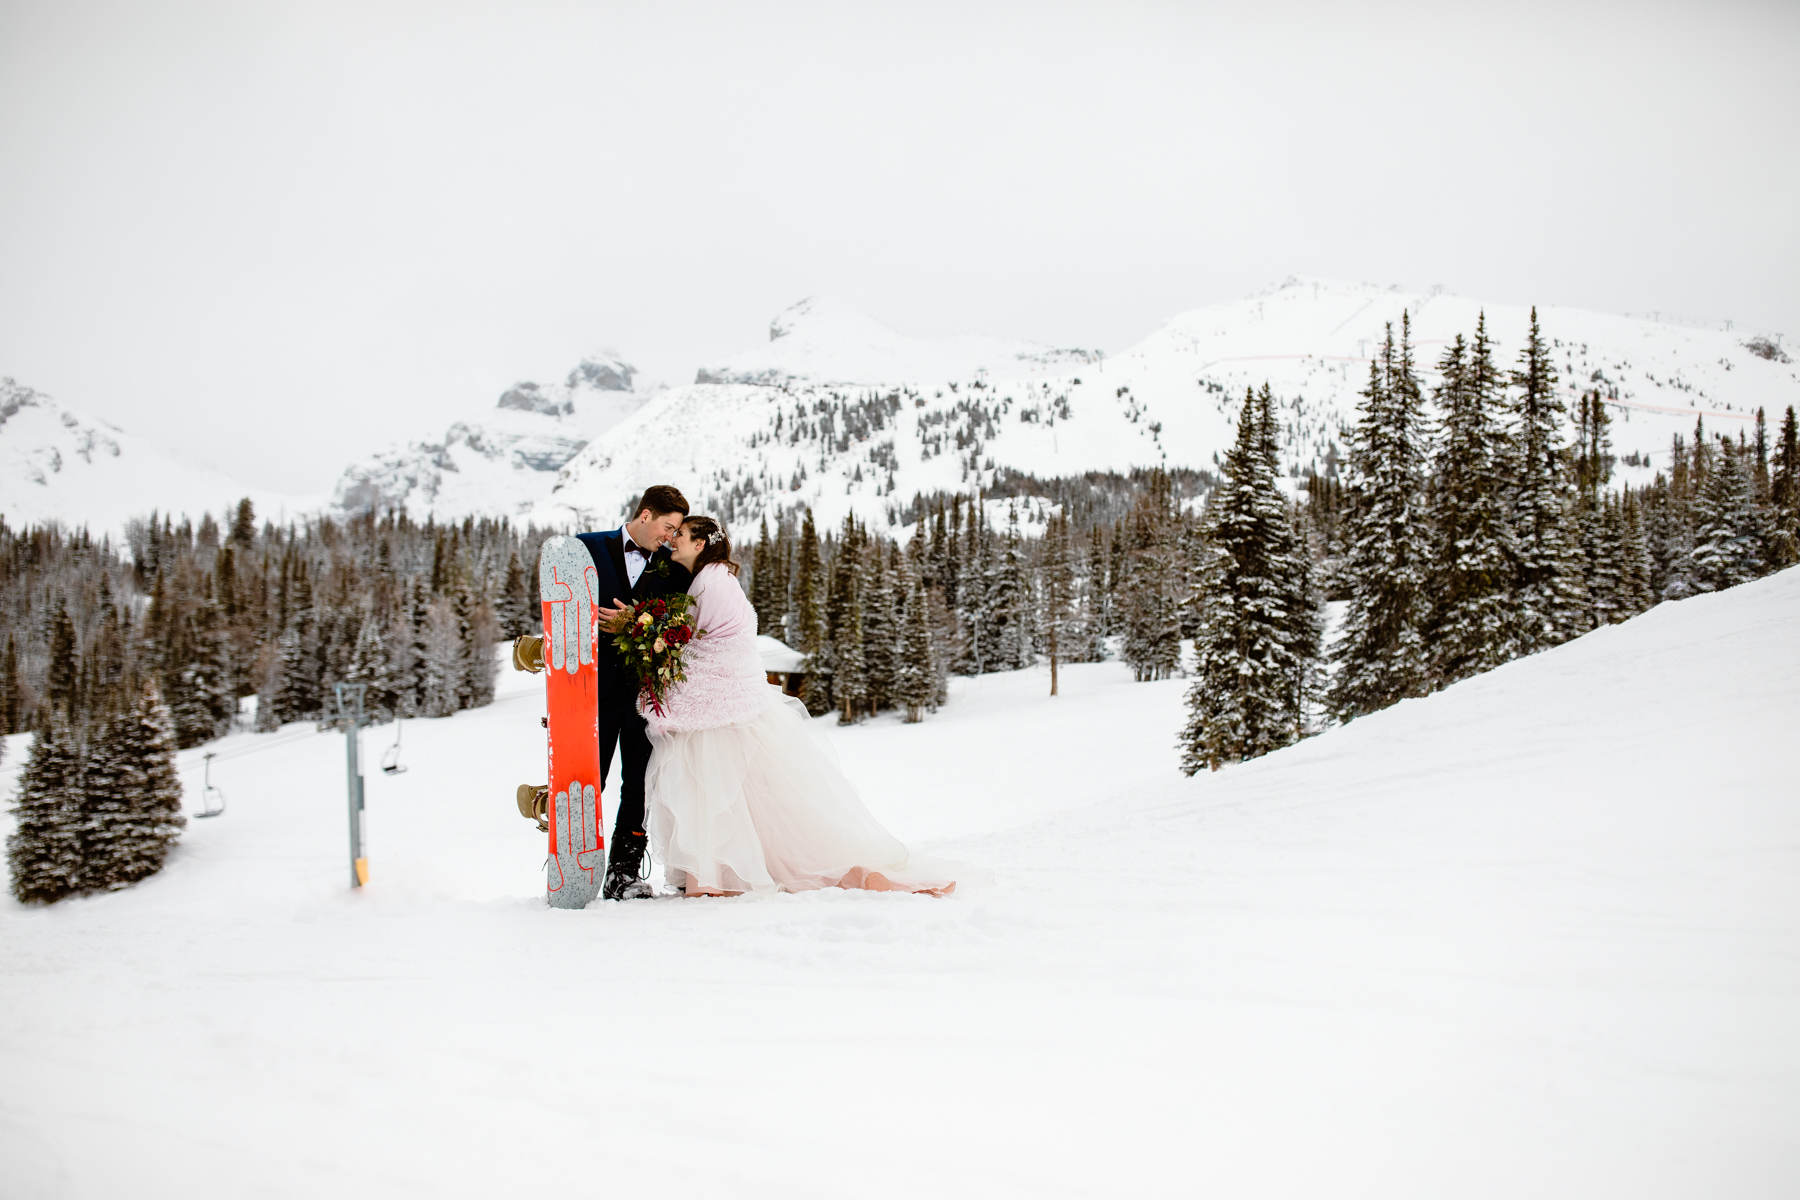 Ski Wedding Photos at Sunshine Village in Banff - Image 34